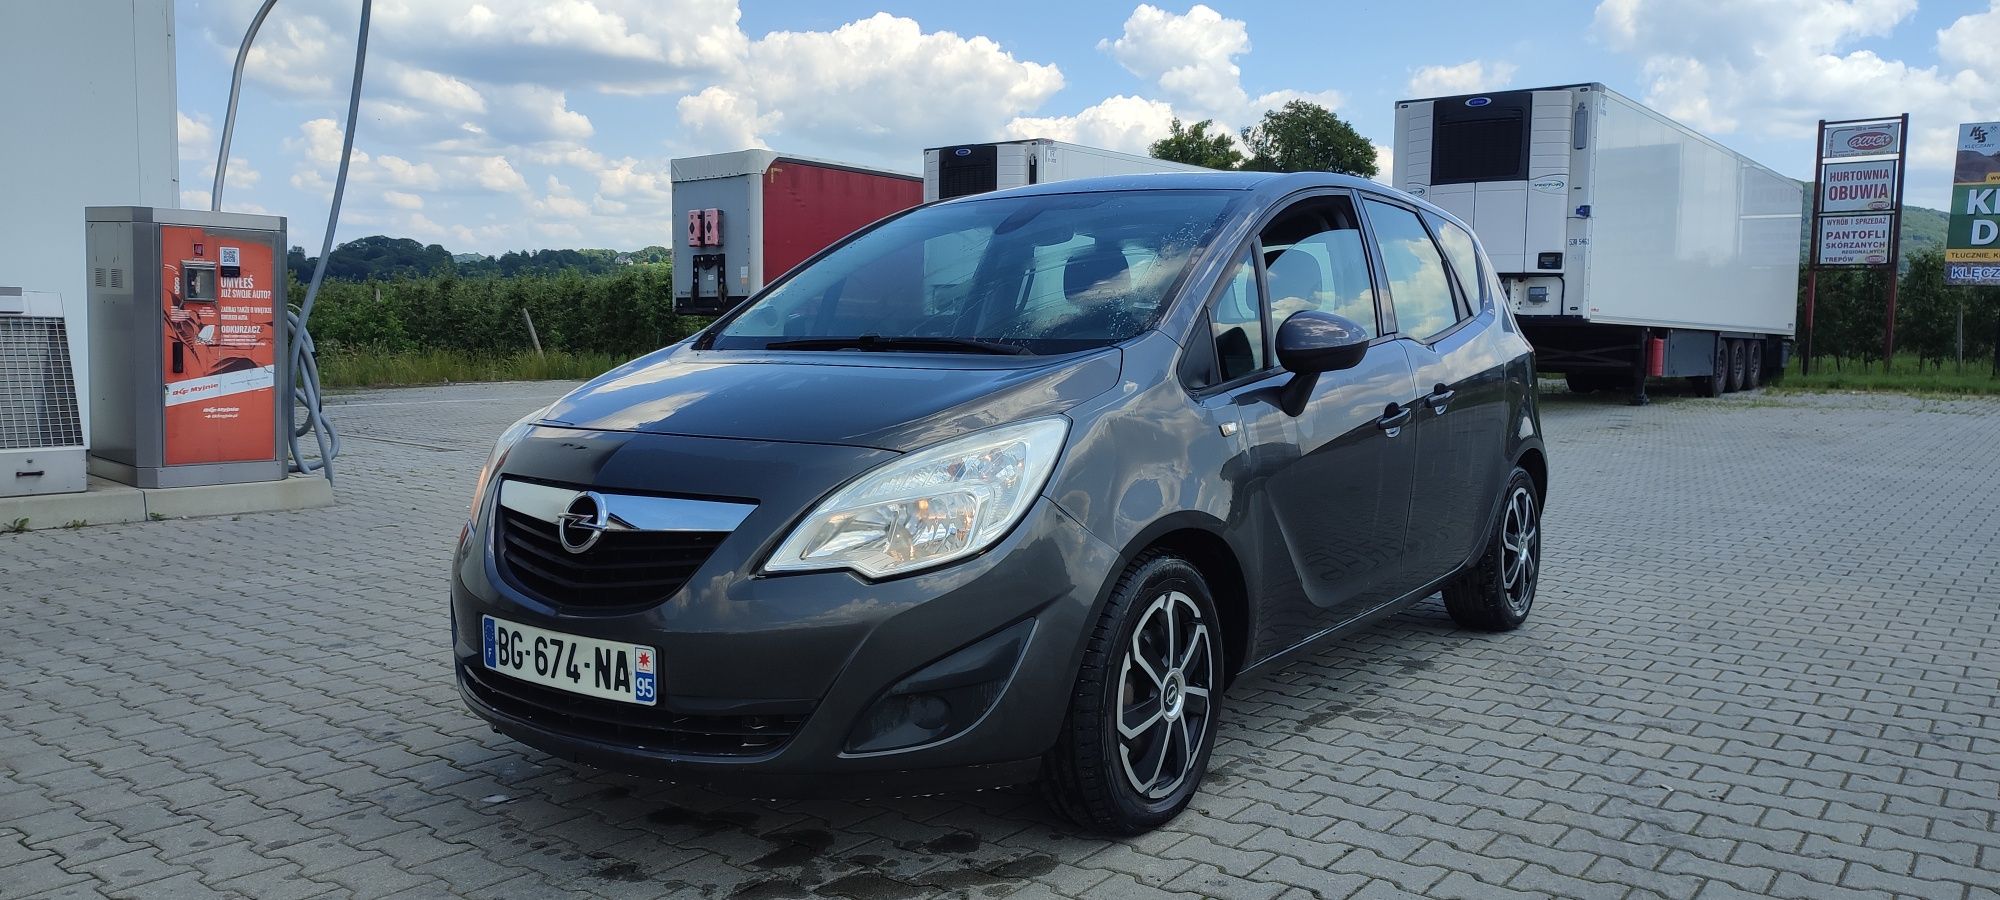 Opel Meriva stan bardzo dobre